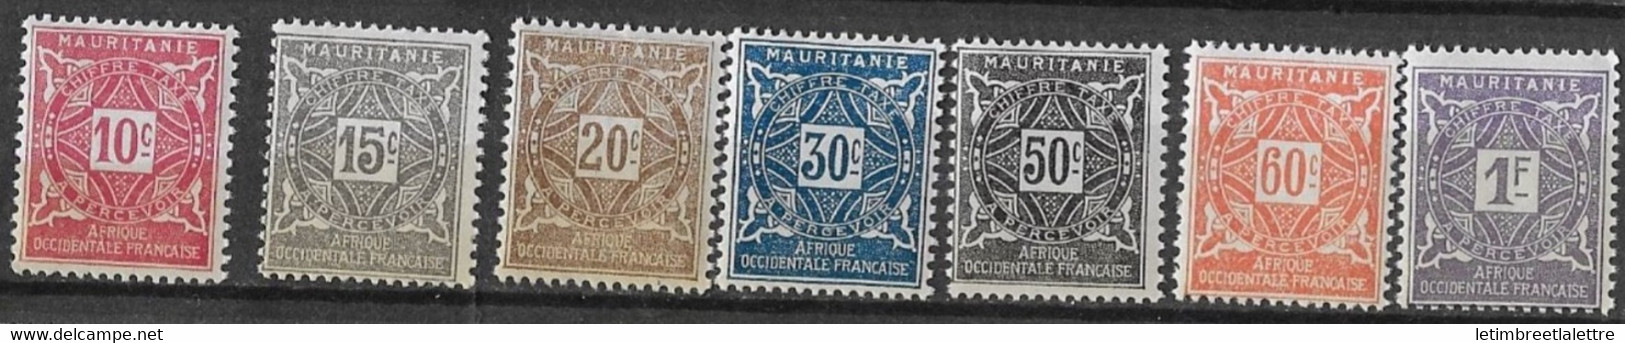 ⭐ Mauritanie - Taxe - YT N° 18 à 24 ** - Neuf Sans Charnière - 1914 ⭐ - Ongebruikt